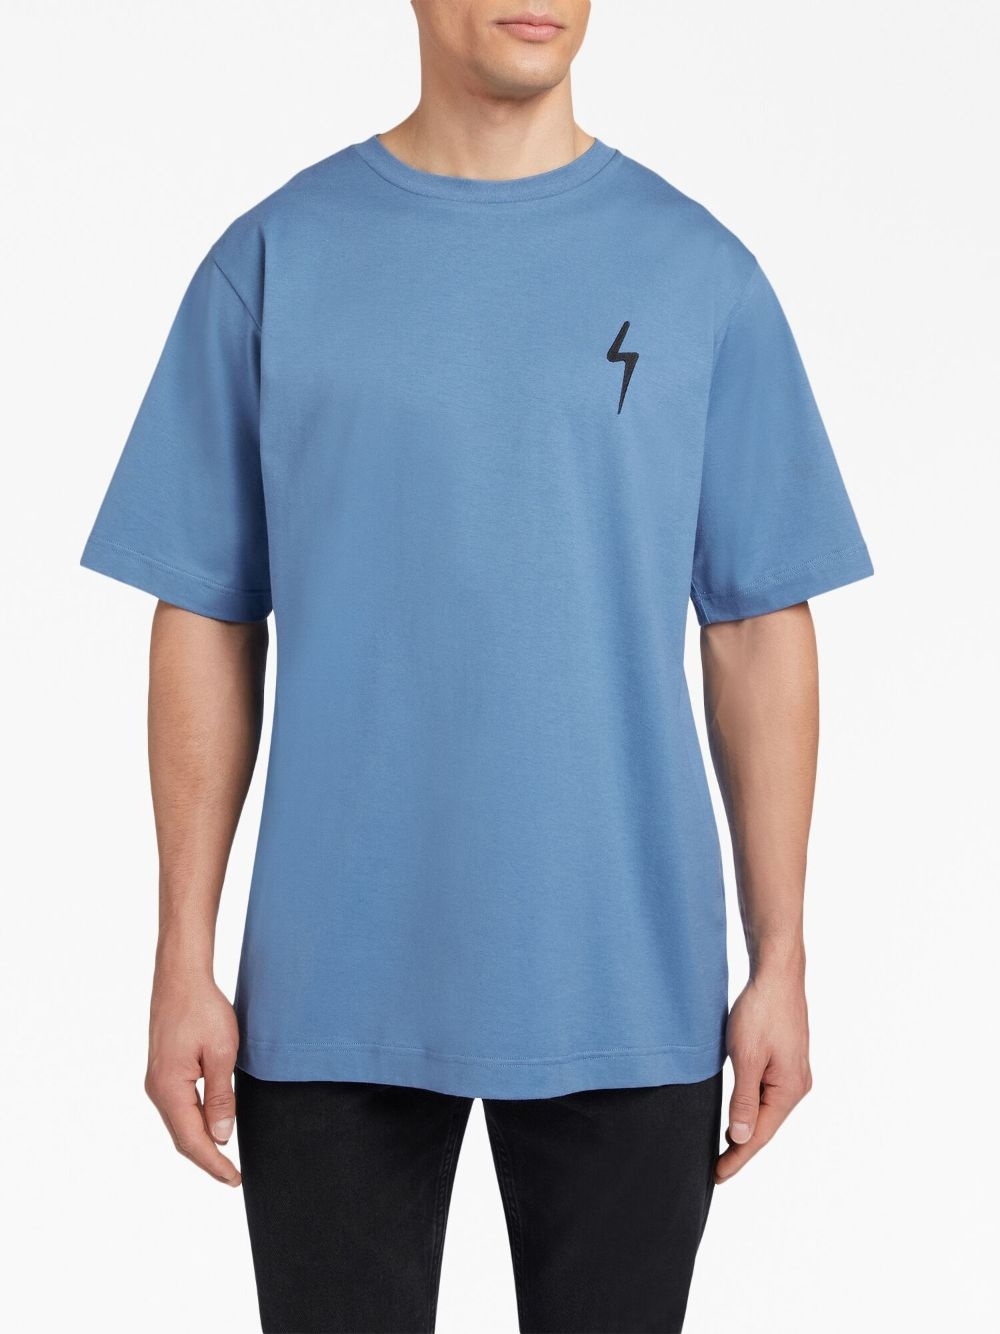 Thunderbolt-embroidered crewneck T-shirt - 3